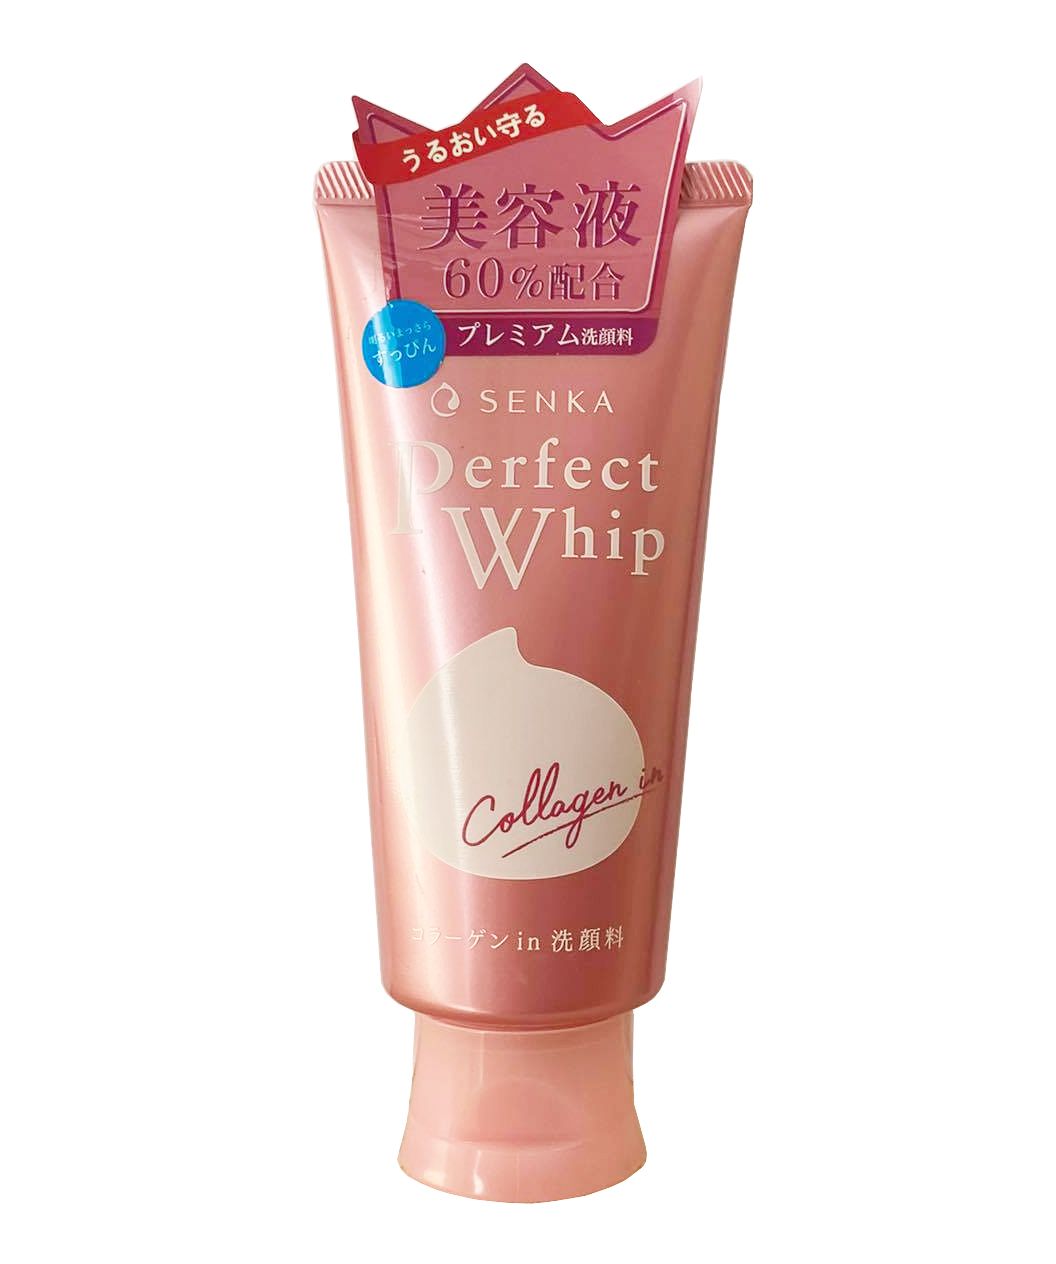 Sữa rửa mặt Shiseido Senka Perfect Whip Collagen in 120g của Nhật (mẫu mới)